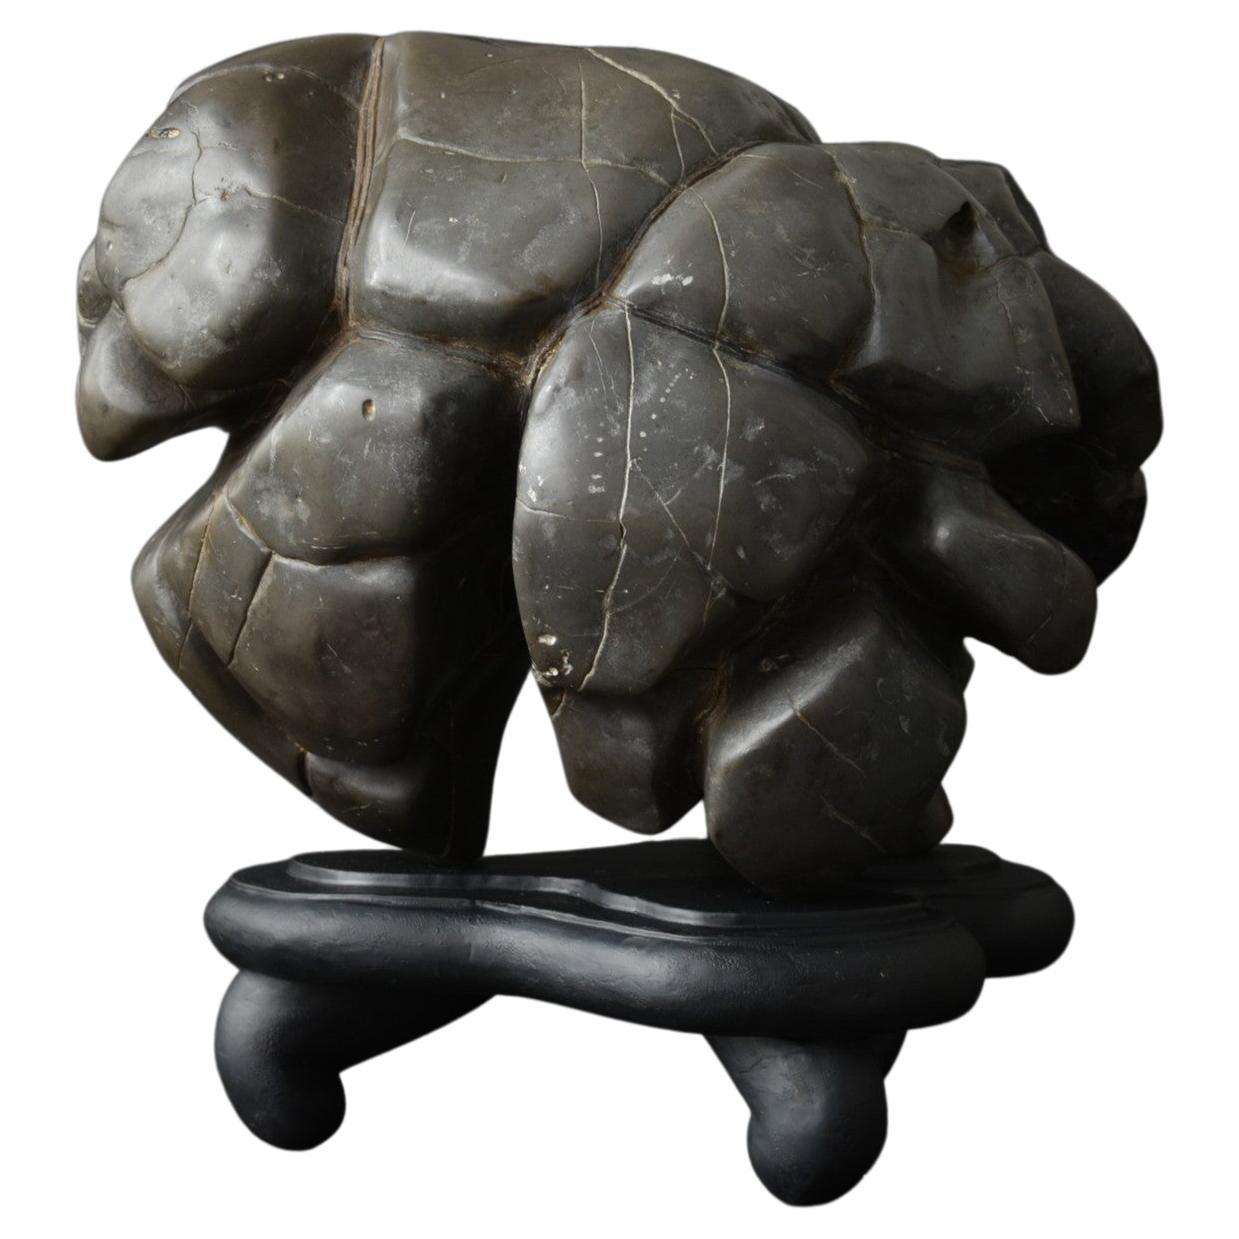 Old Japanese Scholar's Stone/Tortoise Shell Type Stone/AppreciationStone/suiseki